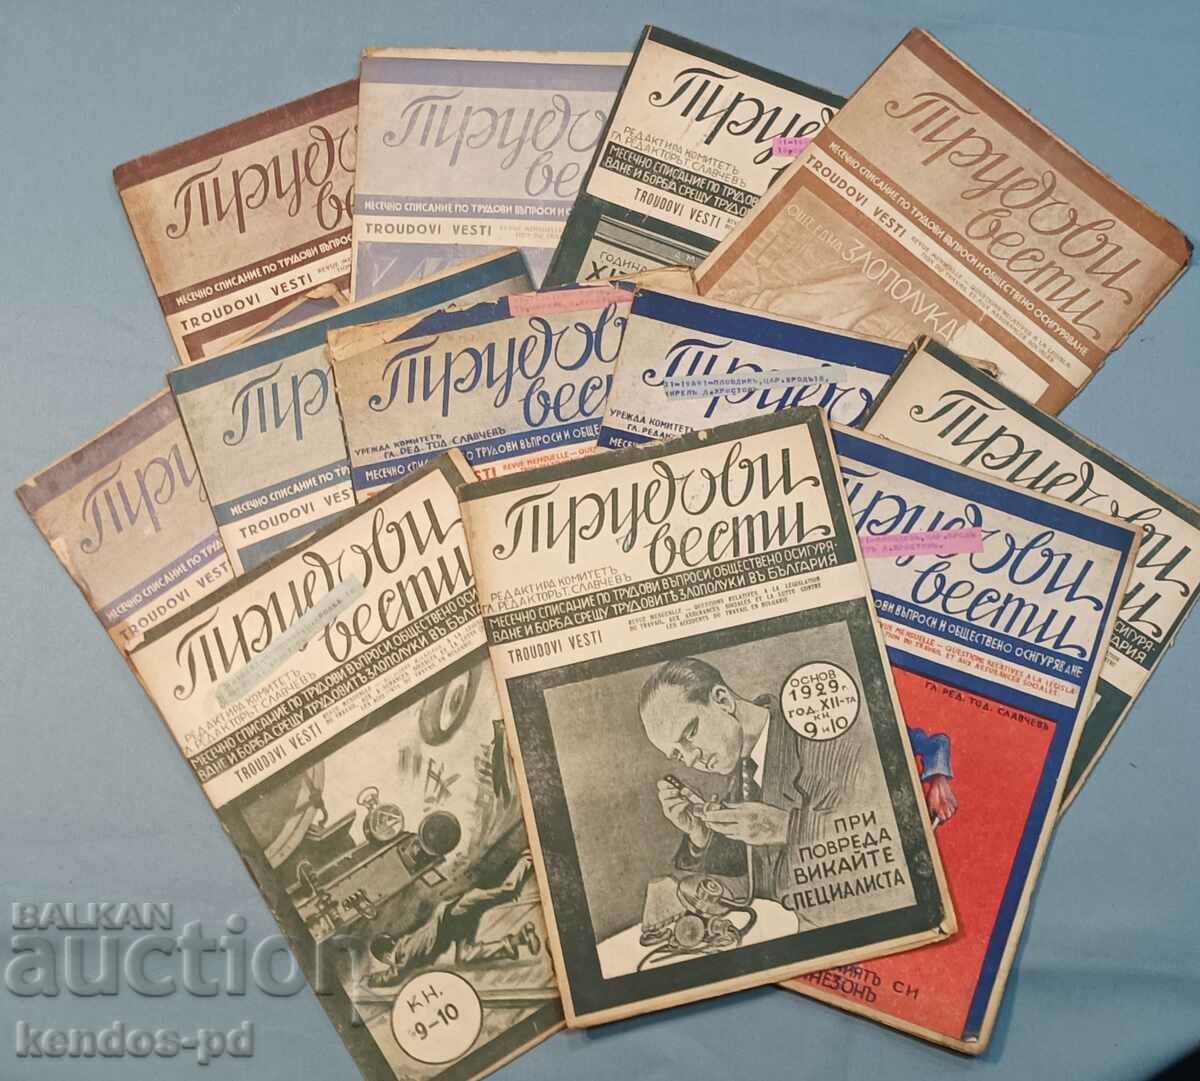 A few old Labor News magazines